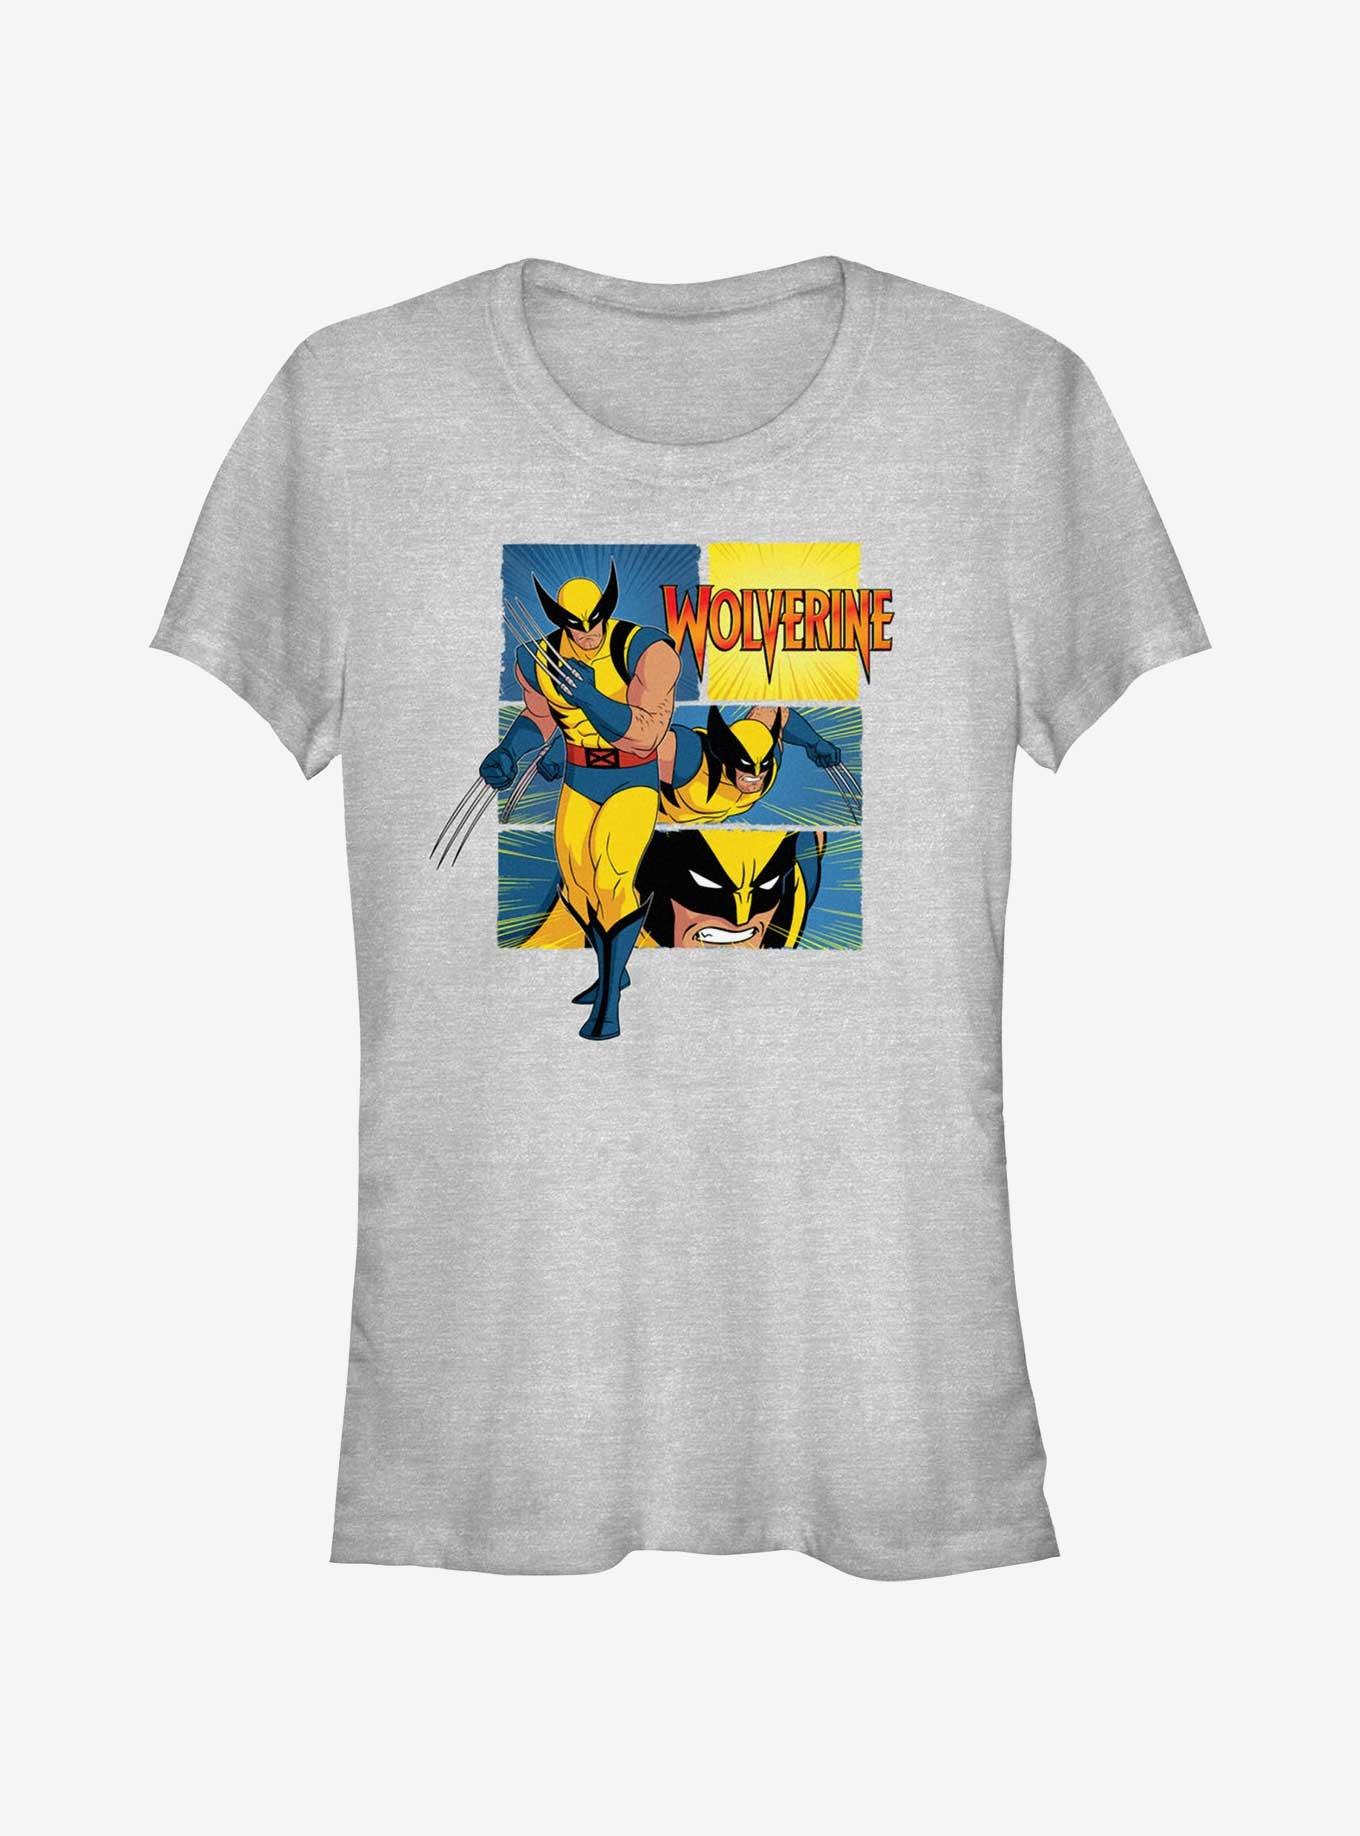 X-Men '97 Wolverine Poses Girls T-Shirt